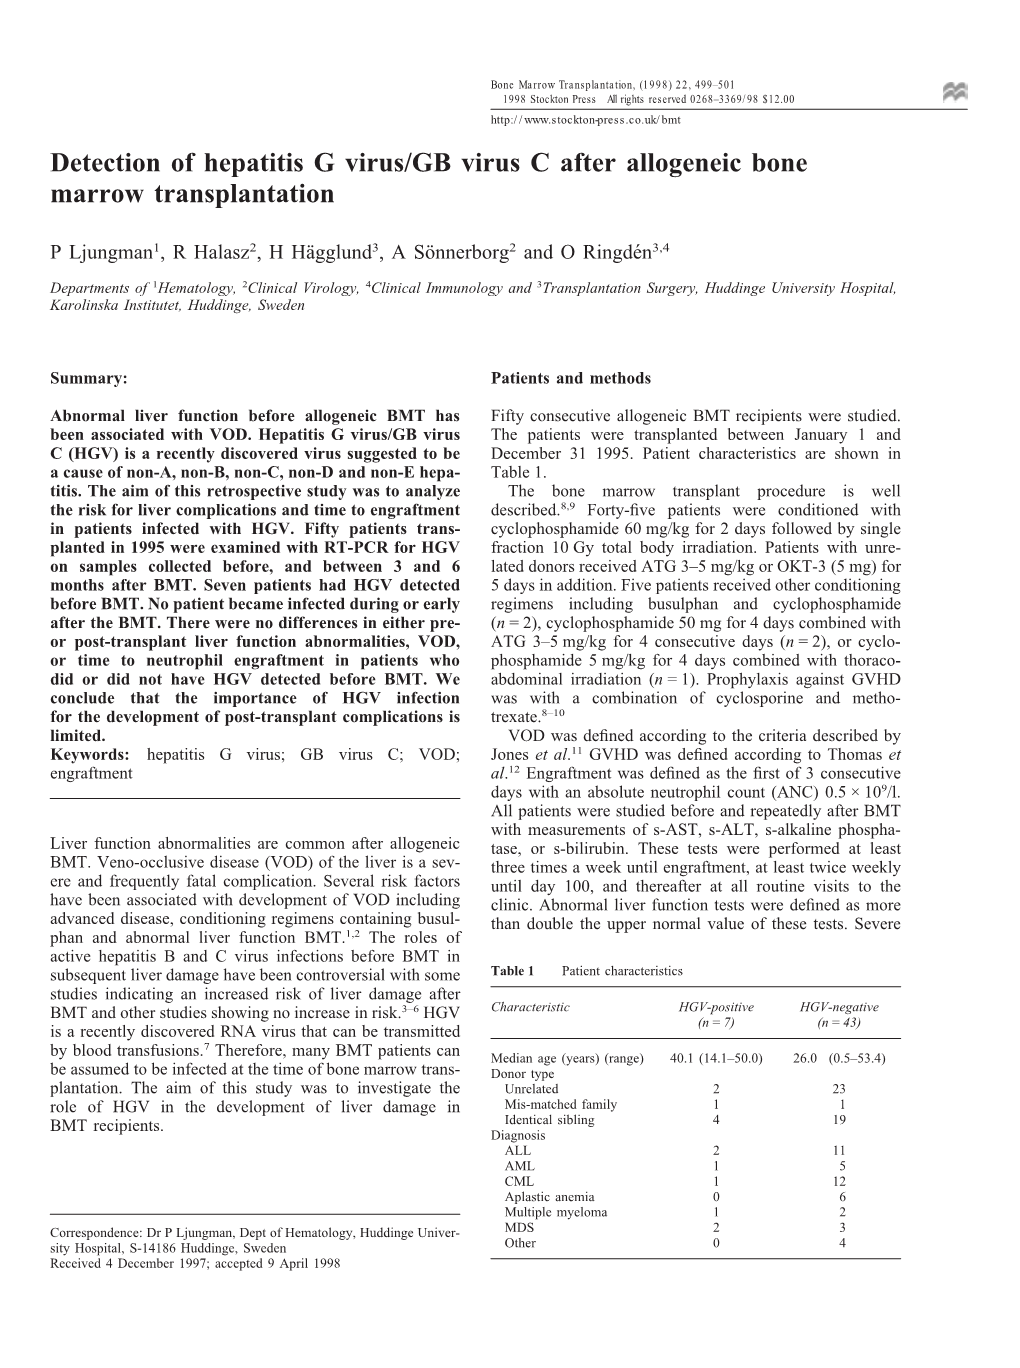 Detection of Hepatitis G Virus/GB Virus C After Allogeneic Bone Marrow Transplantation